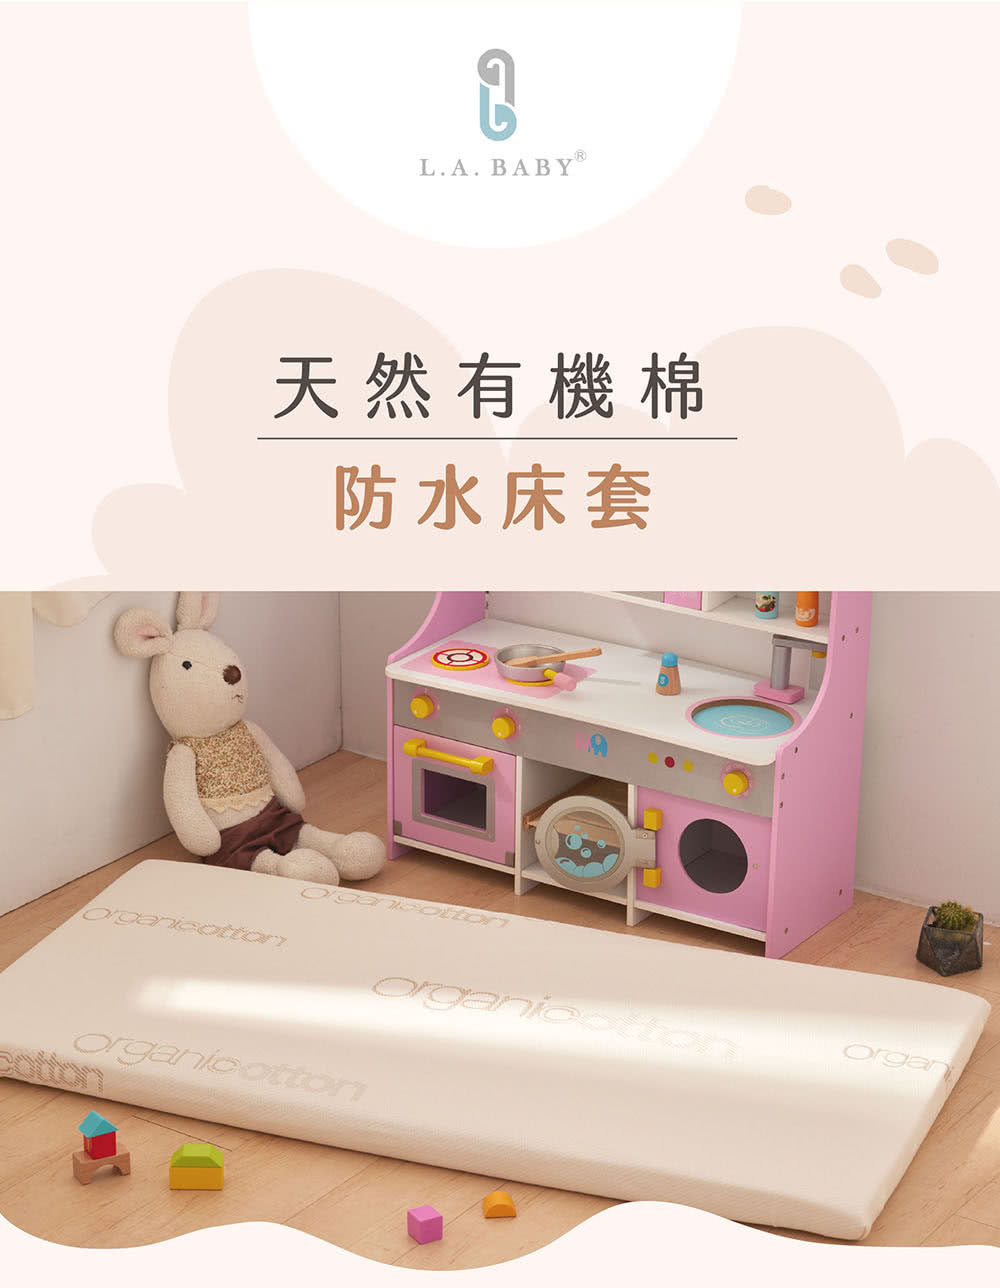 L.A. Baby 天然有機棉防水布套+乳膠床墊 L號(床墊